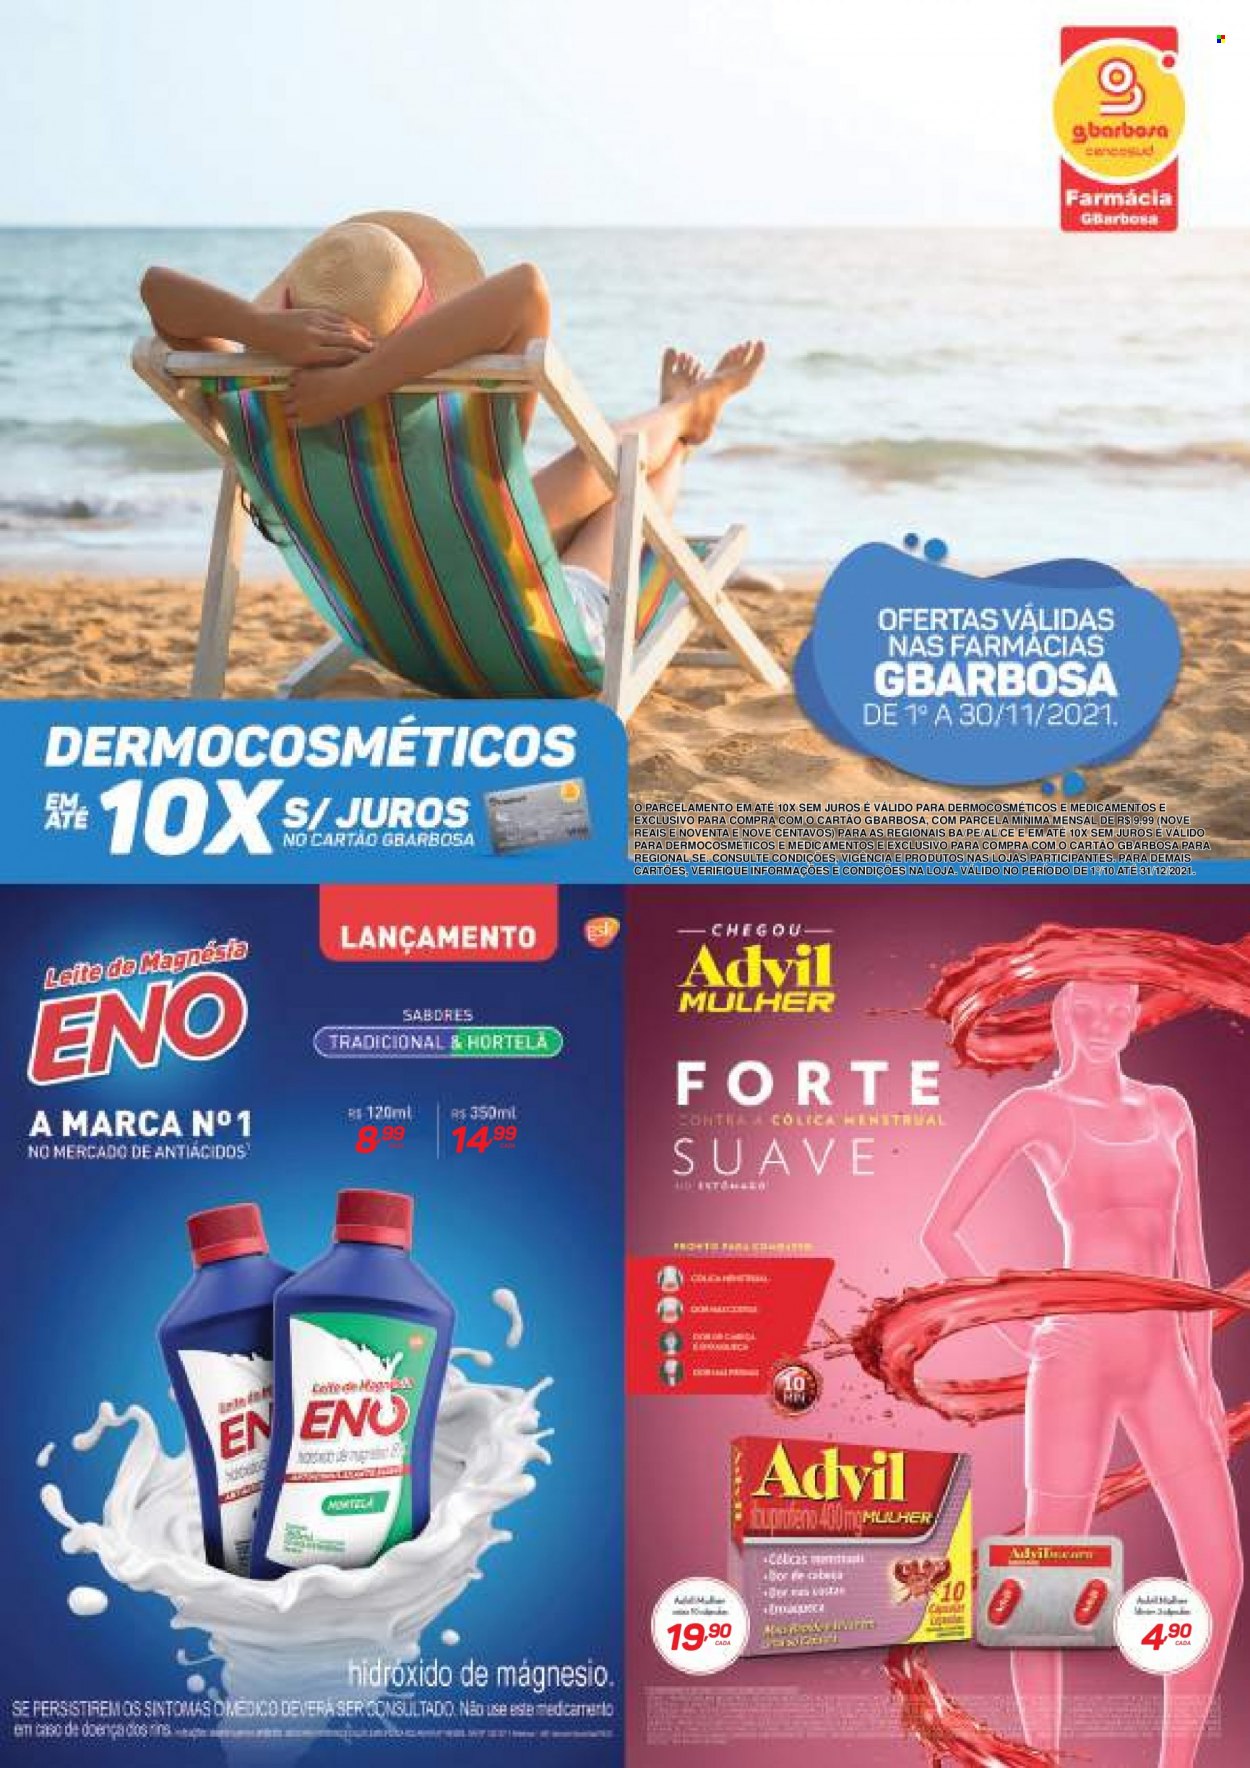 thumbnail - Folheto Gbarbosa - 01/11/2021 - 30/11/2021 - Produtos em promoção - leite, hortelã, Advil. Página 1.